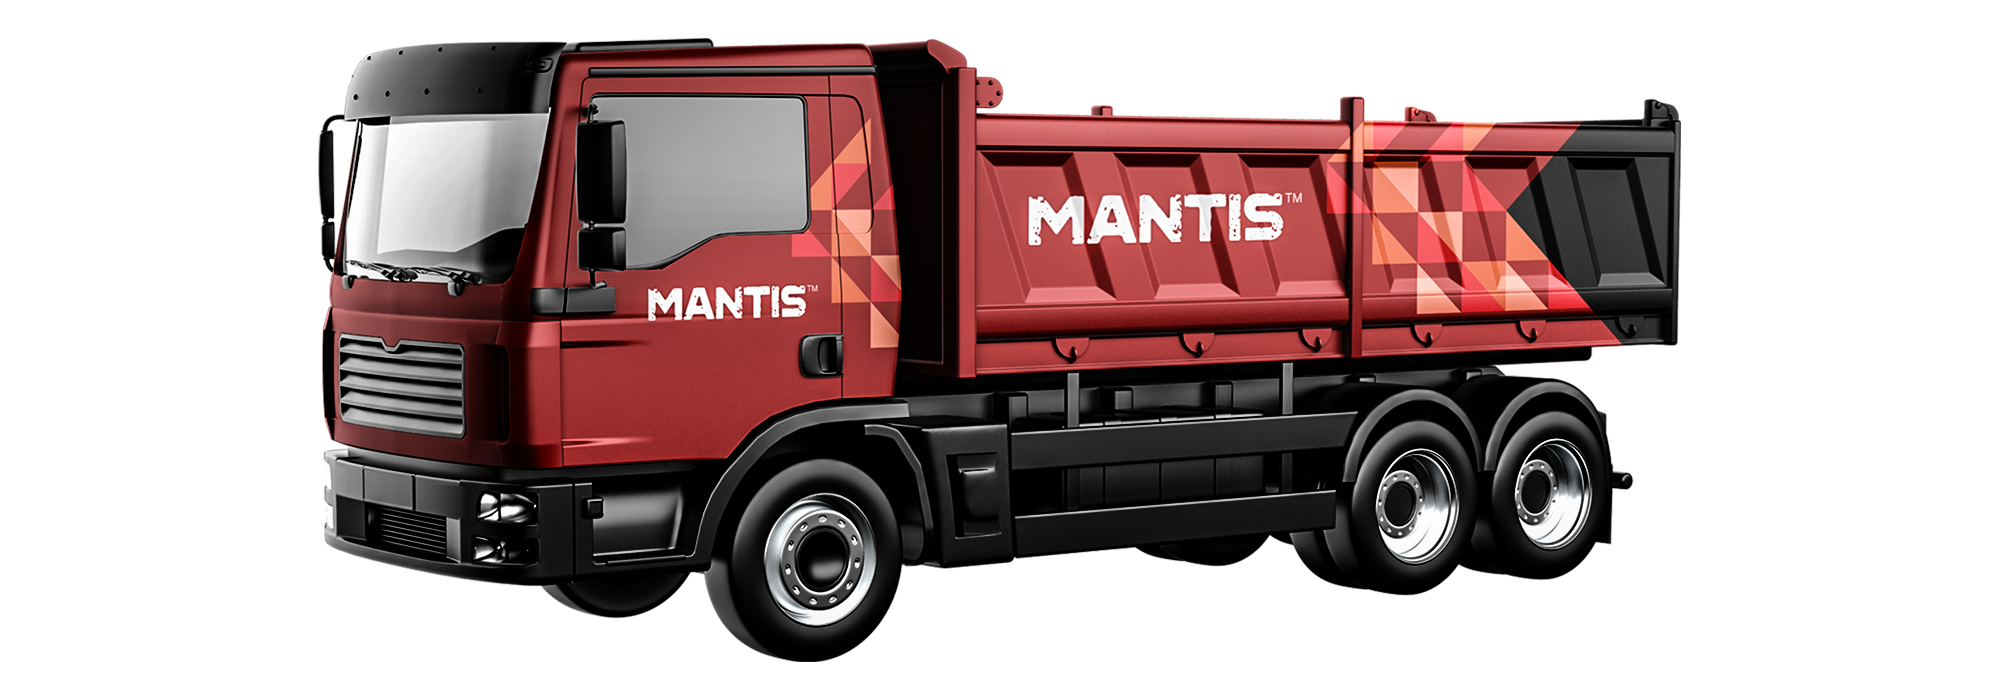 MANTIS - Aggregates Vehicle